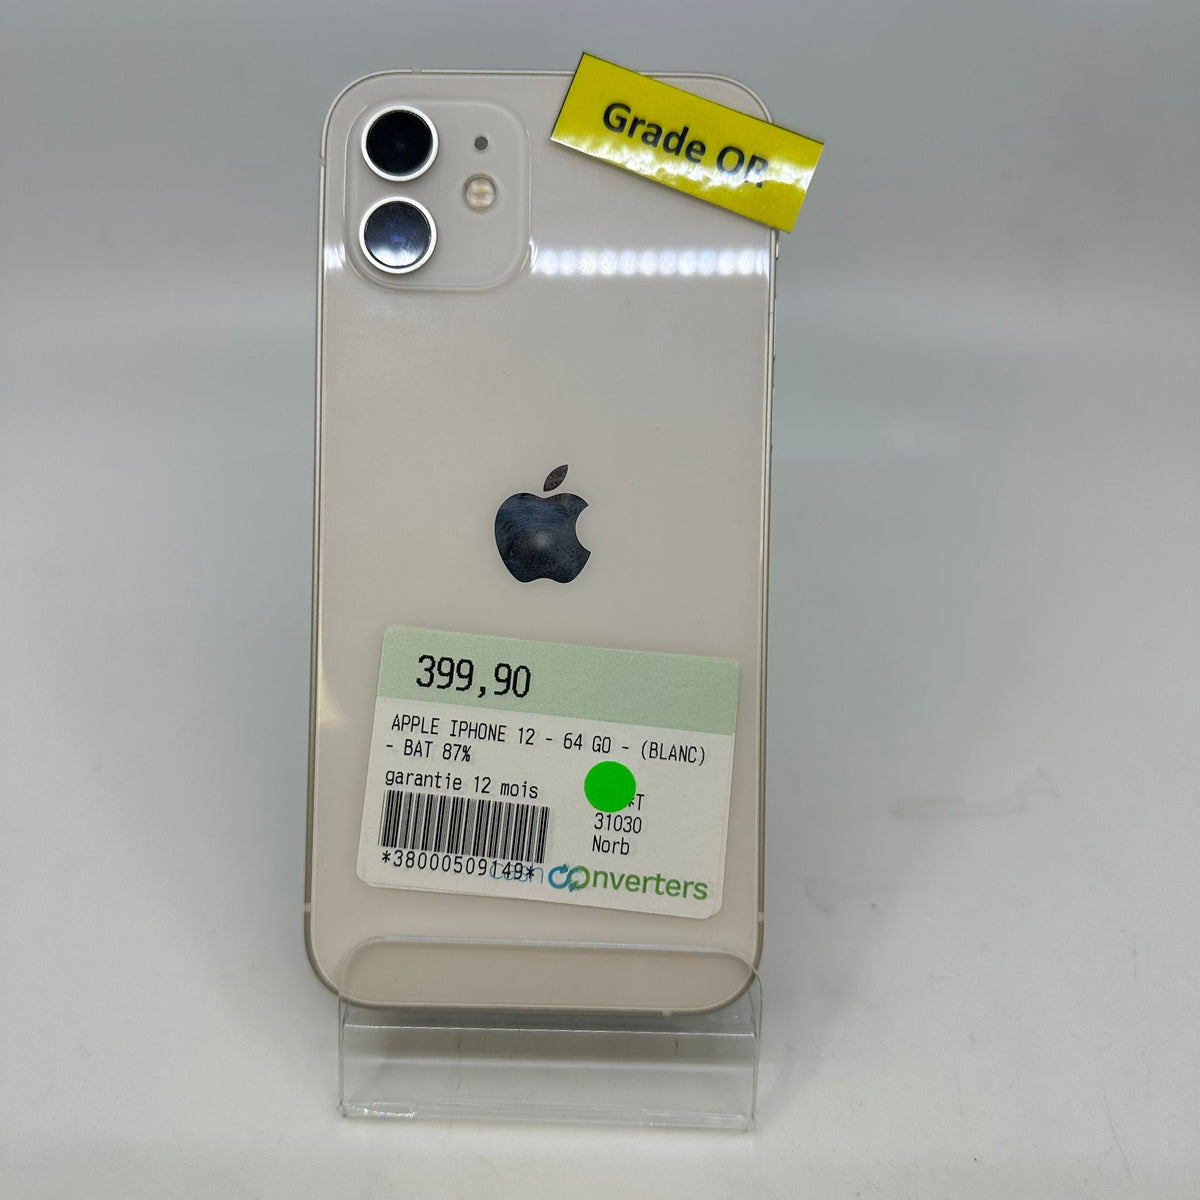 Apple iPhone 12 64Go – Cash Converters Suisse